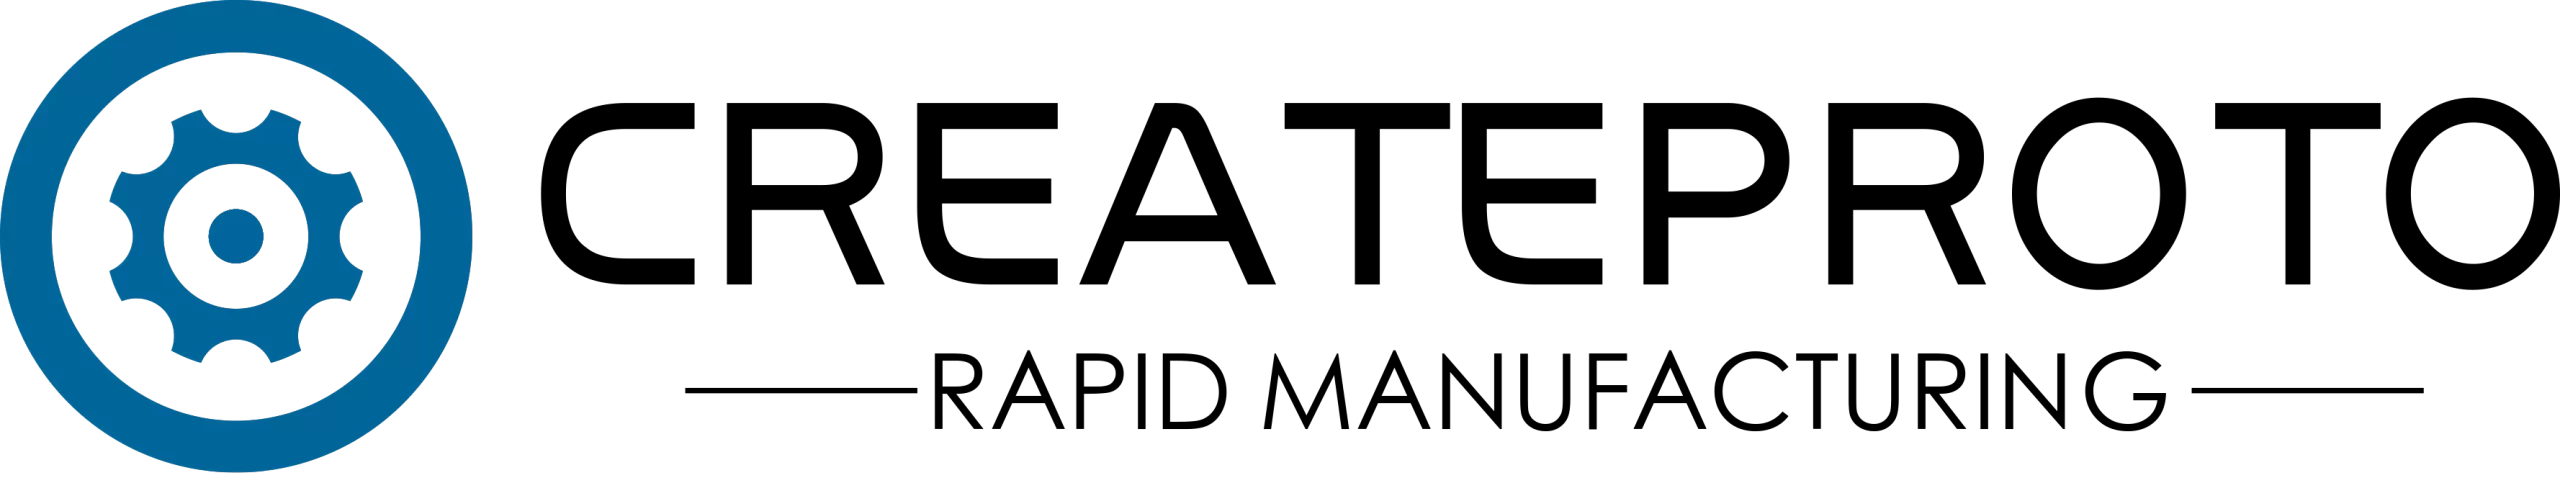 createproto-logo